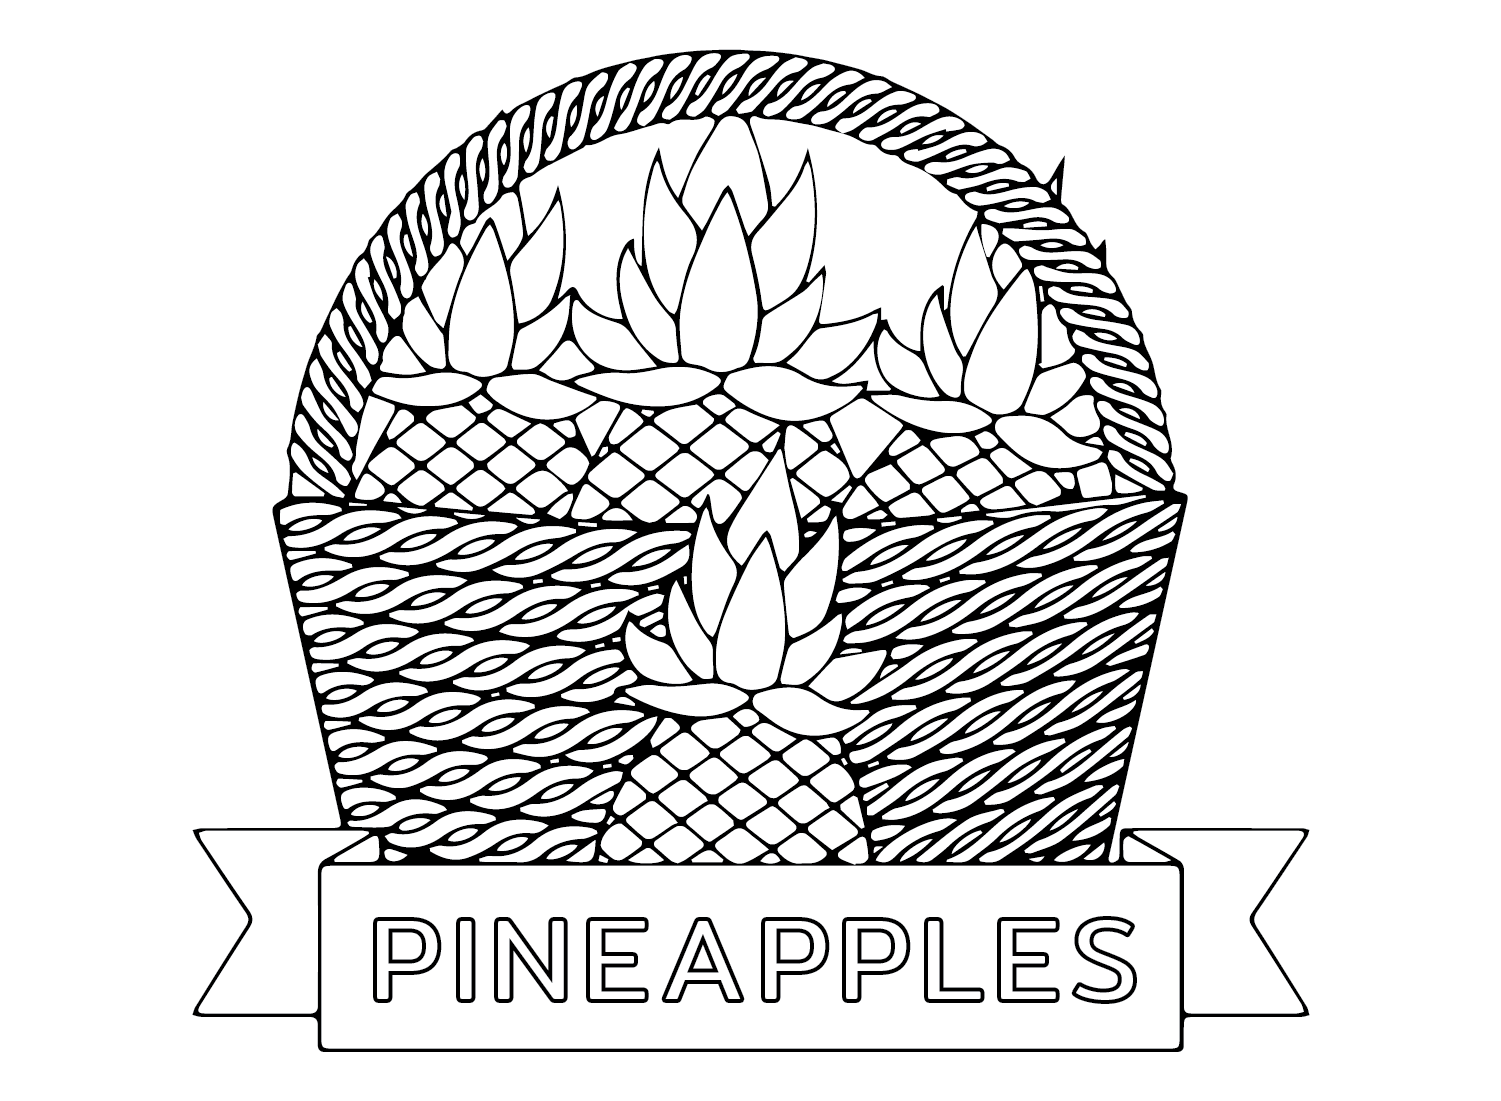 Ananasmandje van Pineapples